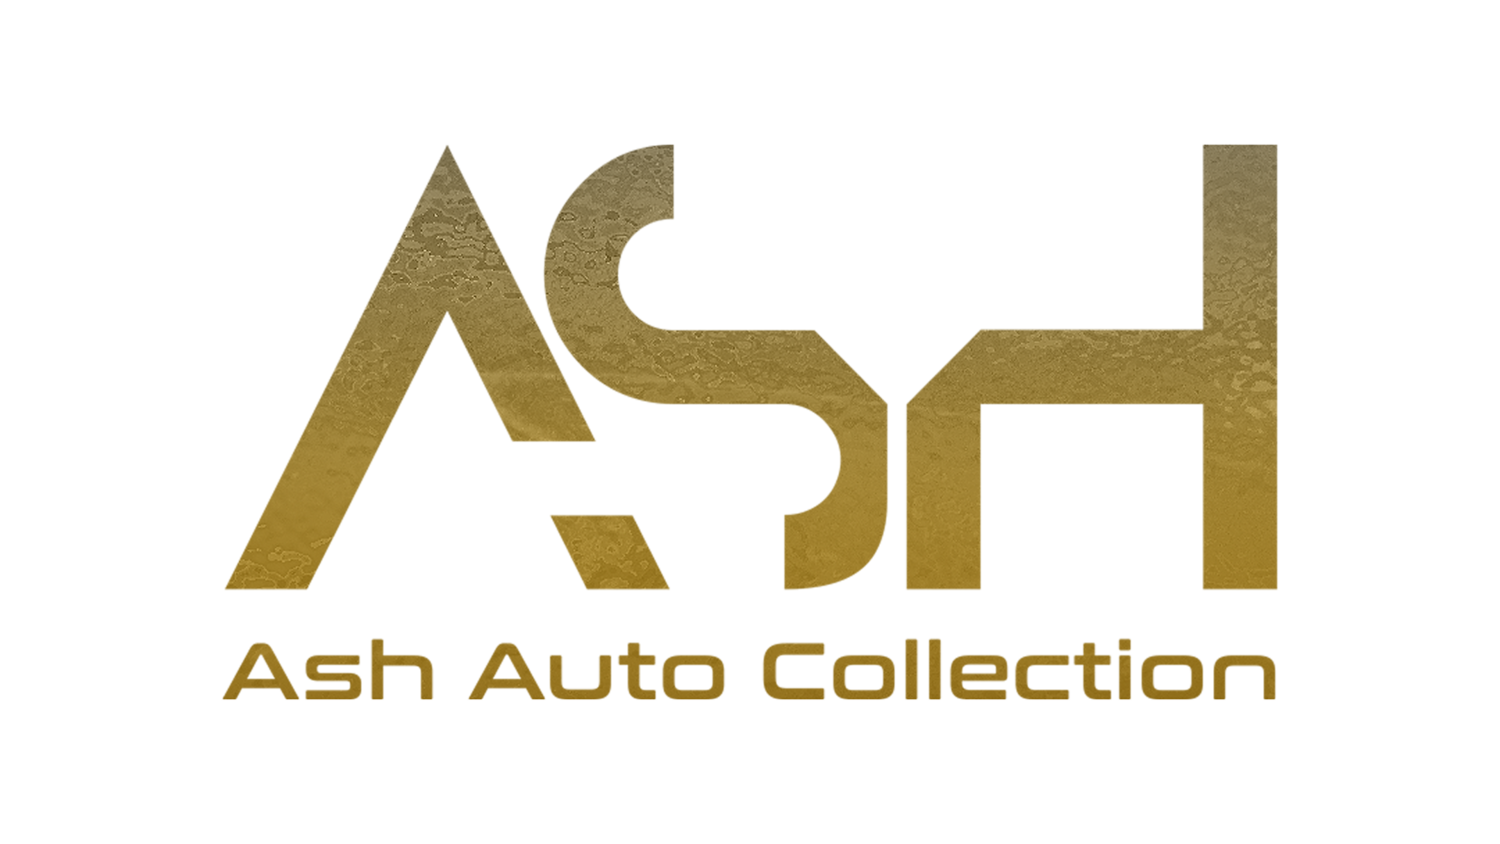 Ash auto collection